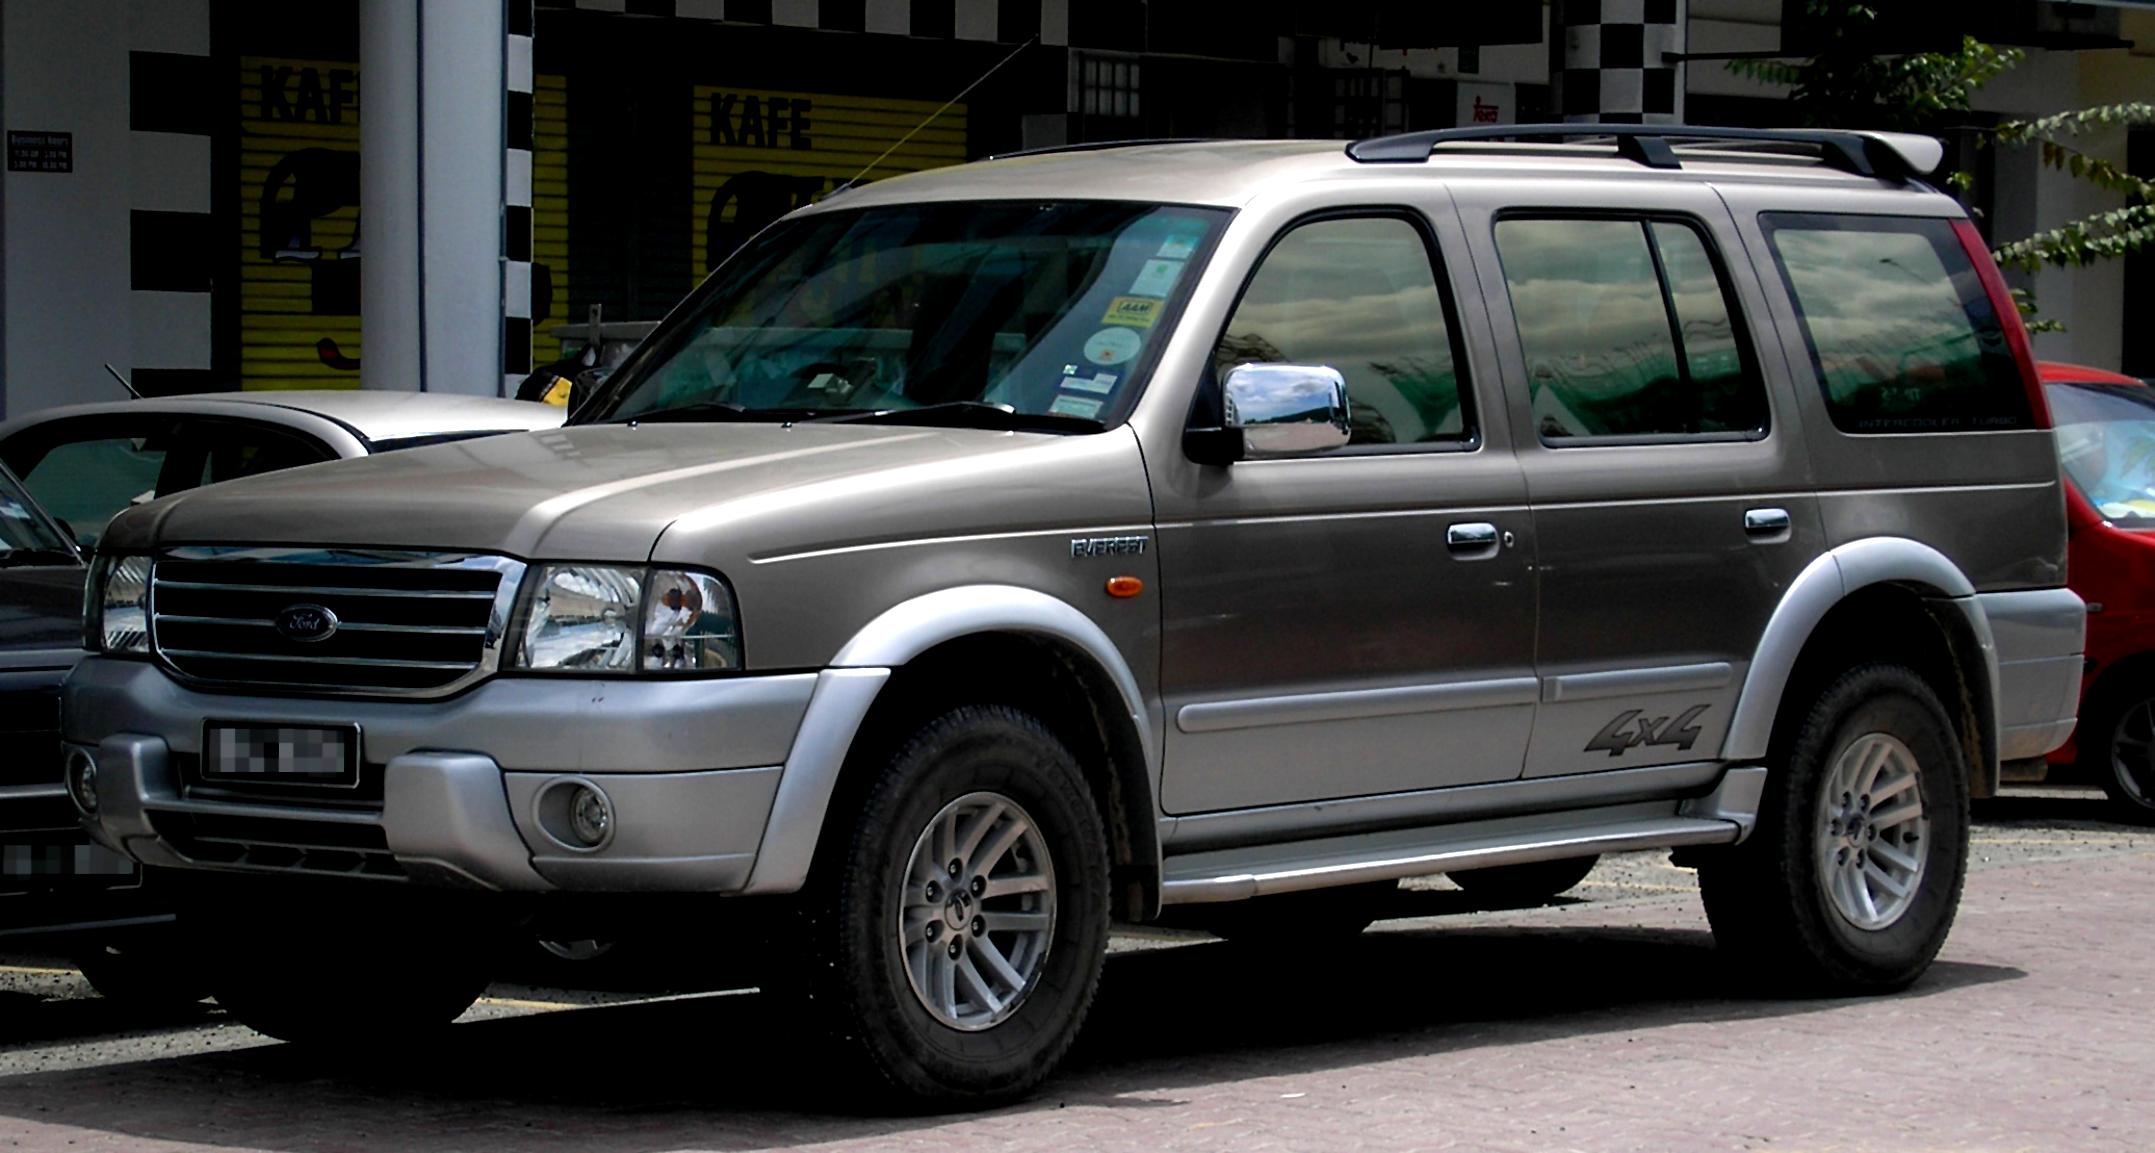 Ford Everest 2003 #1